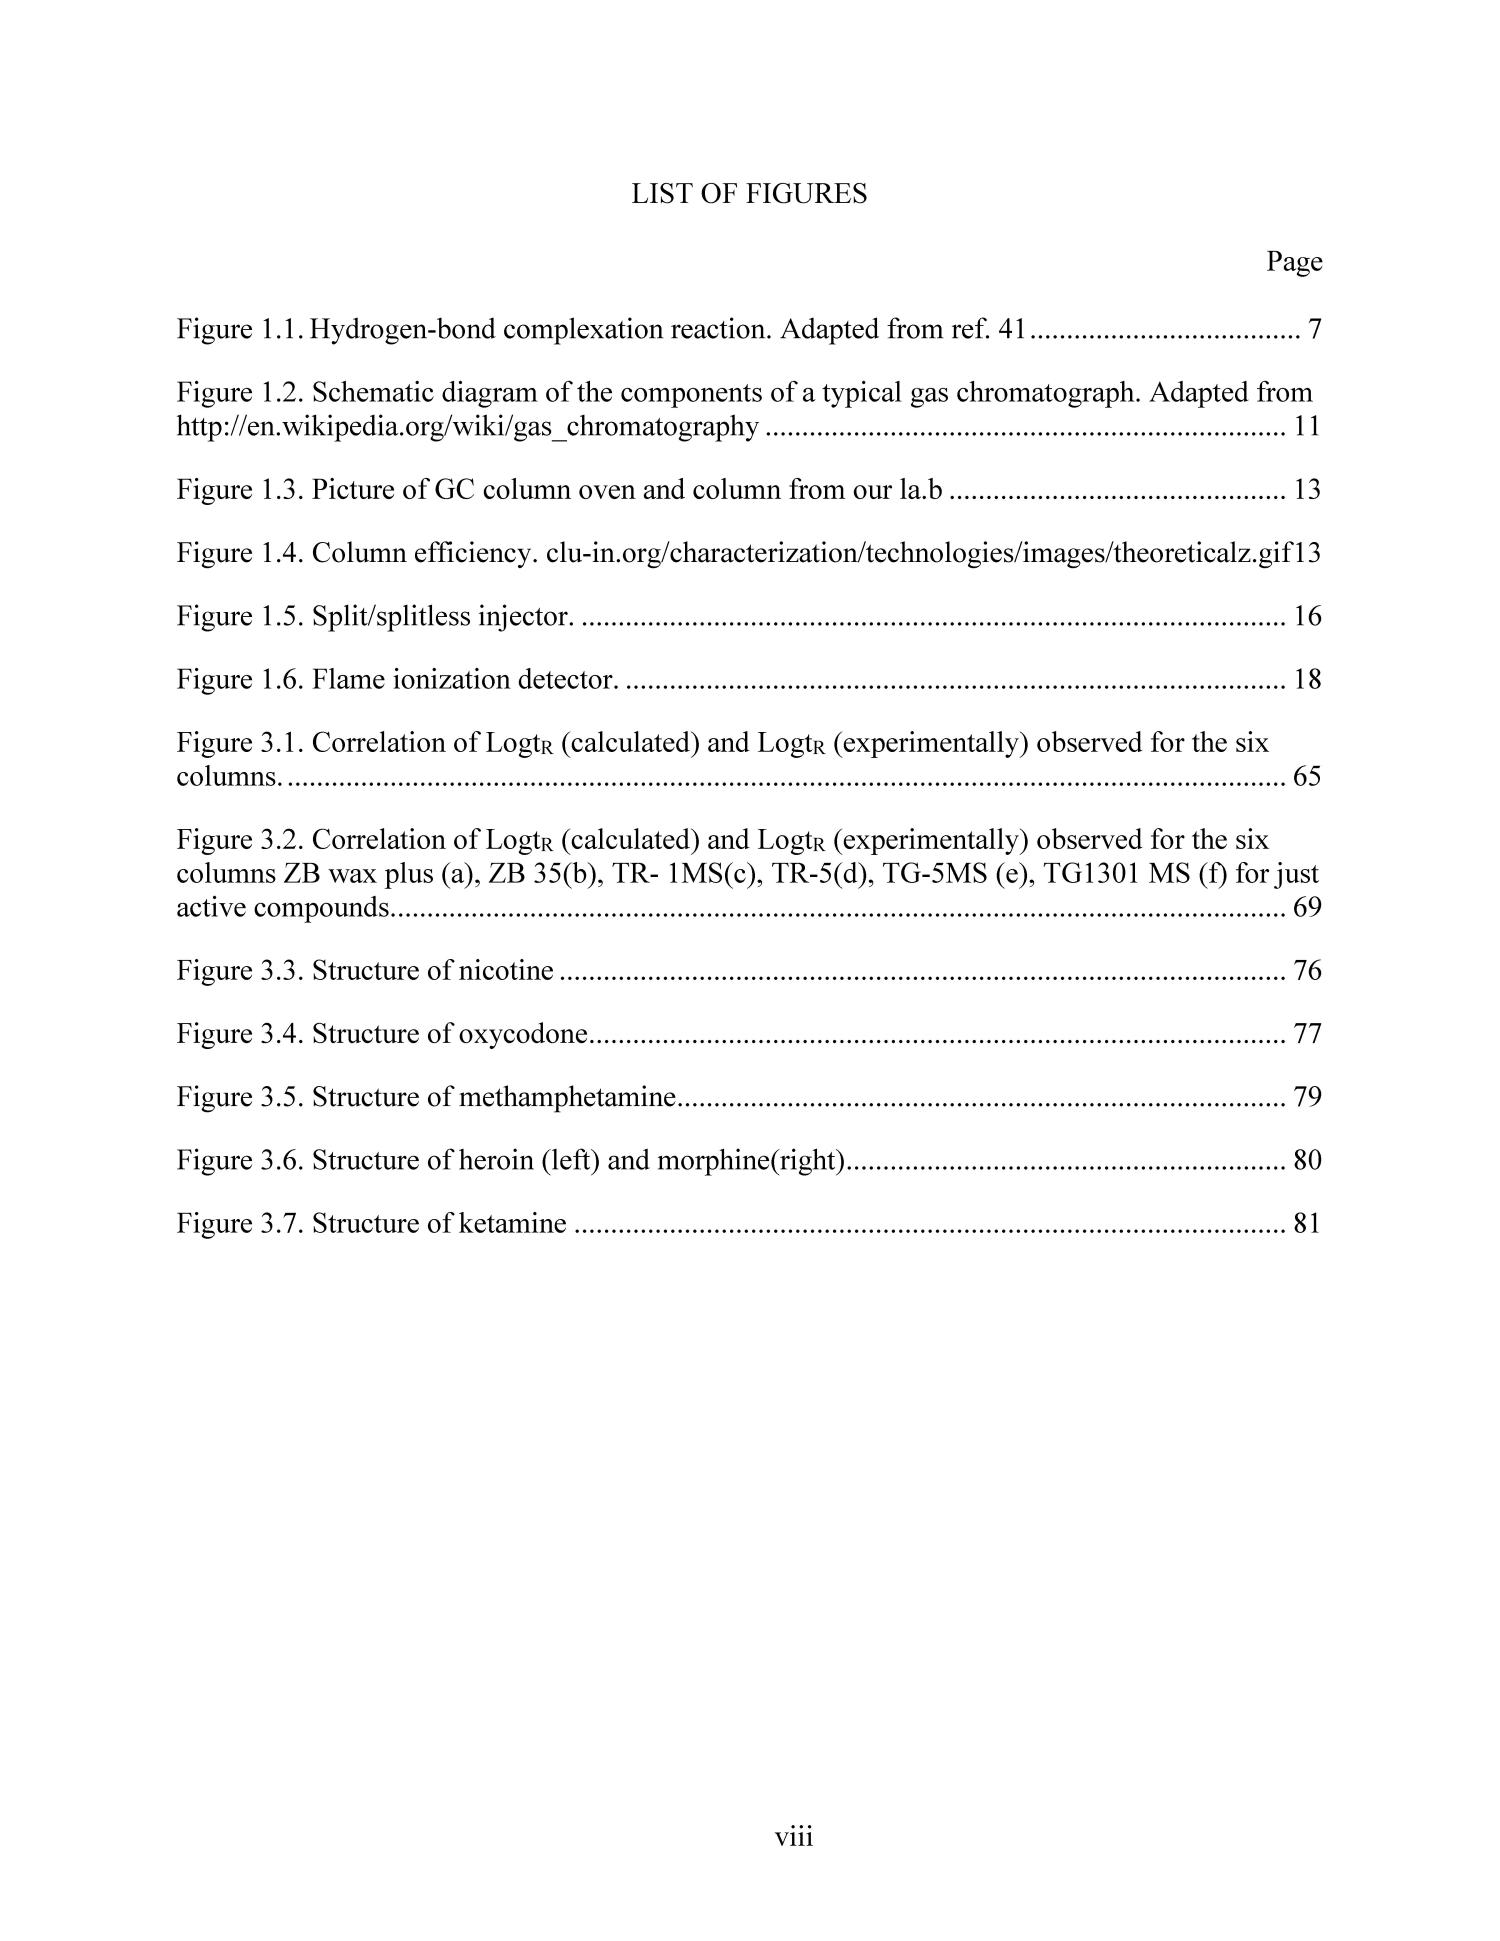 Determination of Solute Descriptors for Illicit Drugs Using Gas Chromatographic Retention Data and Abraham Solvation Model
                                                
                                                    VIII
                                                